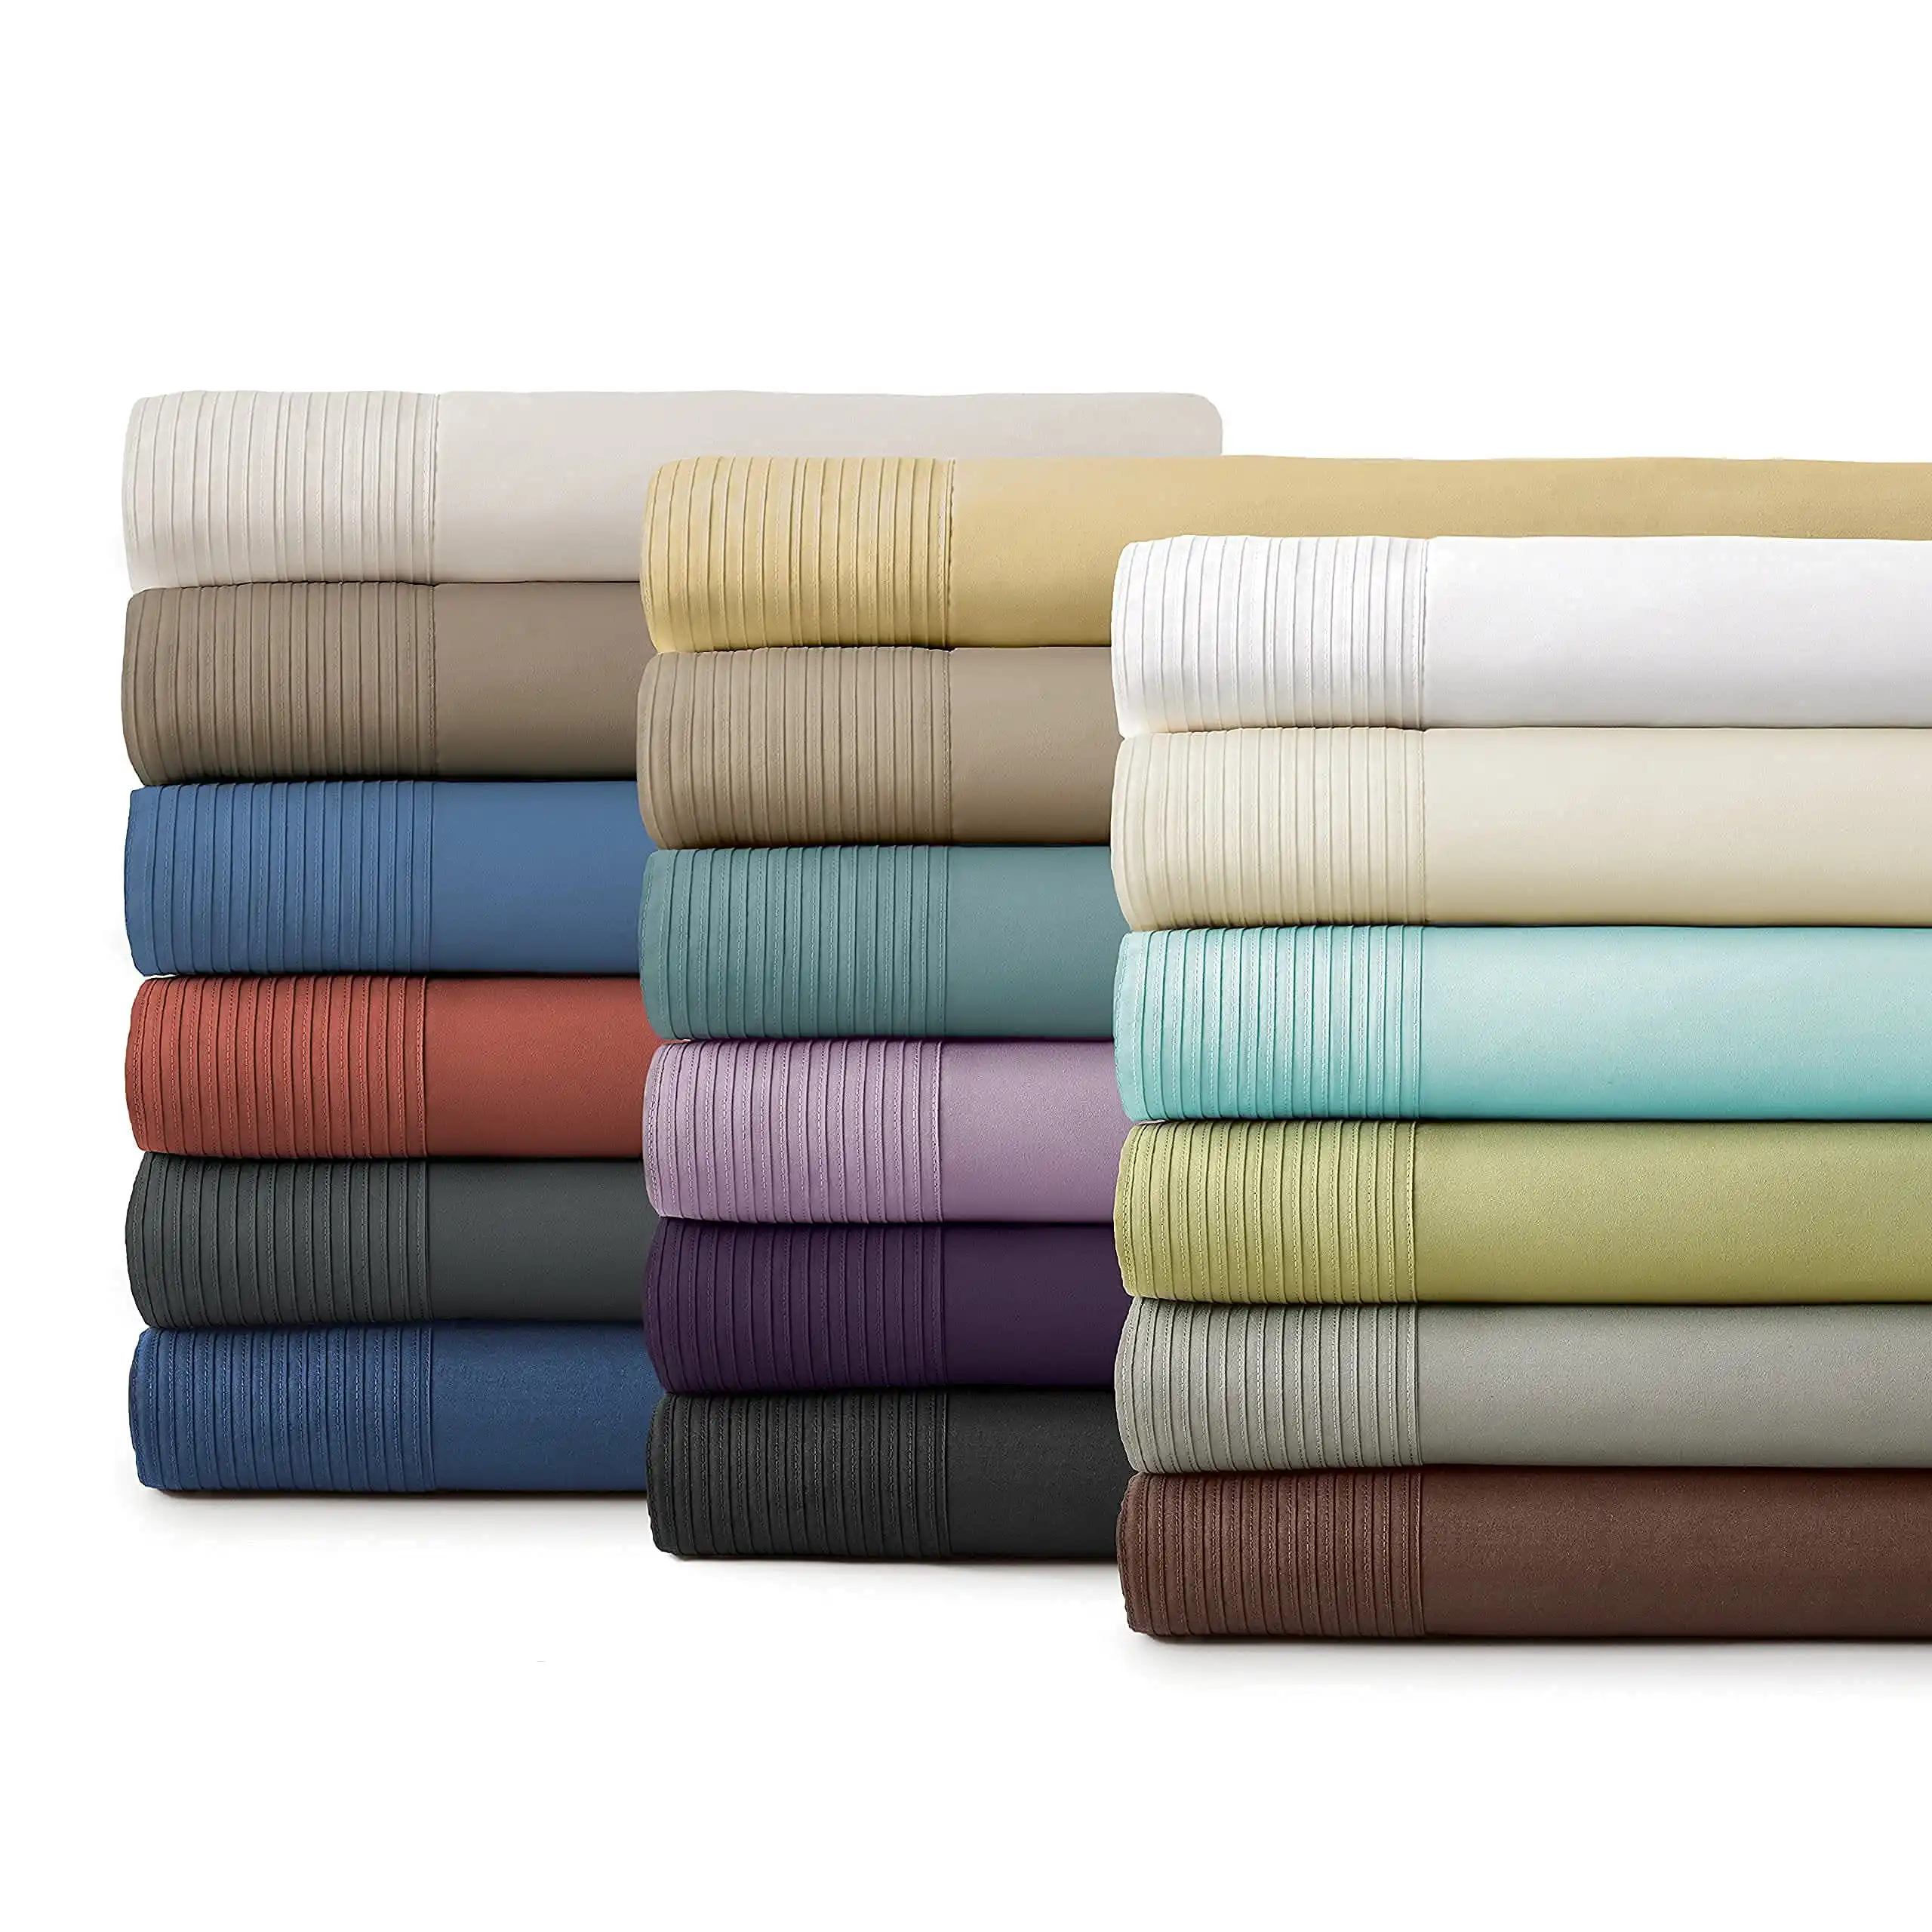 Soft Like 1800tc egyptian cotton sheet sets Home 4 Piece Microfiber Bed Sheet for Solid Color Comforter Bedsheet Bedding Set